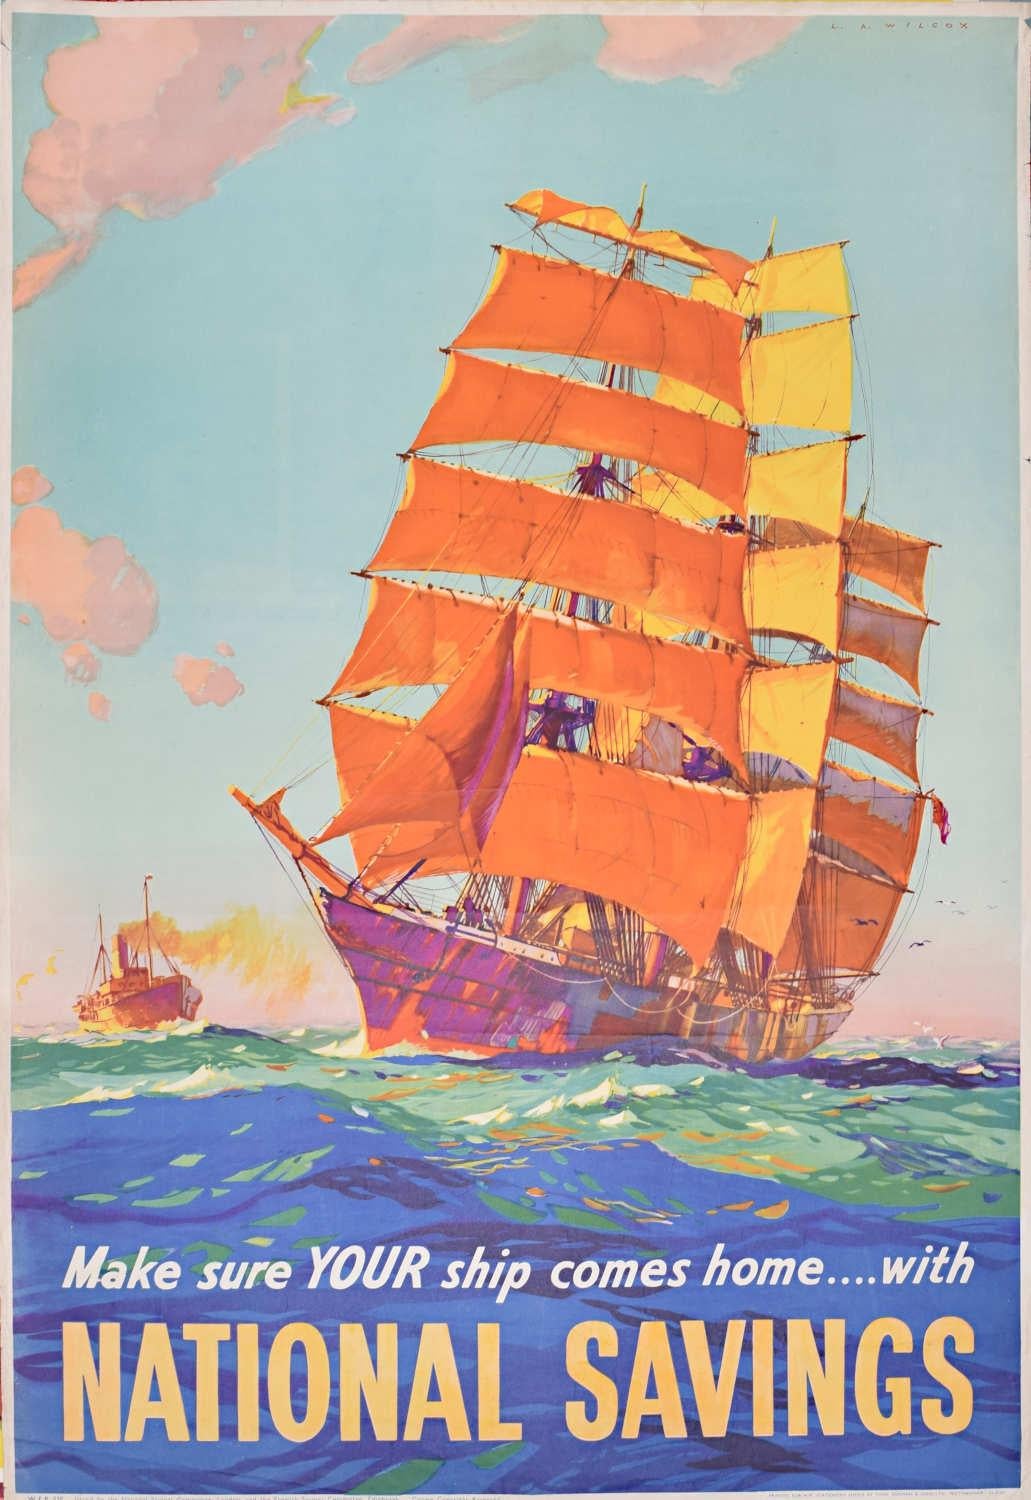 Leslie Arthur Wilcox Print - British National Savings Poster c. 1945 Leslie Wilcox Make Sure Your Ship Comes